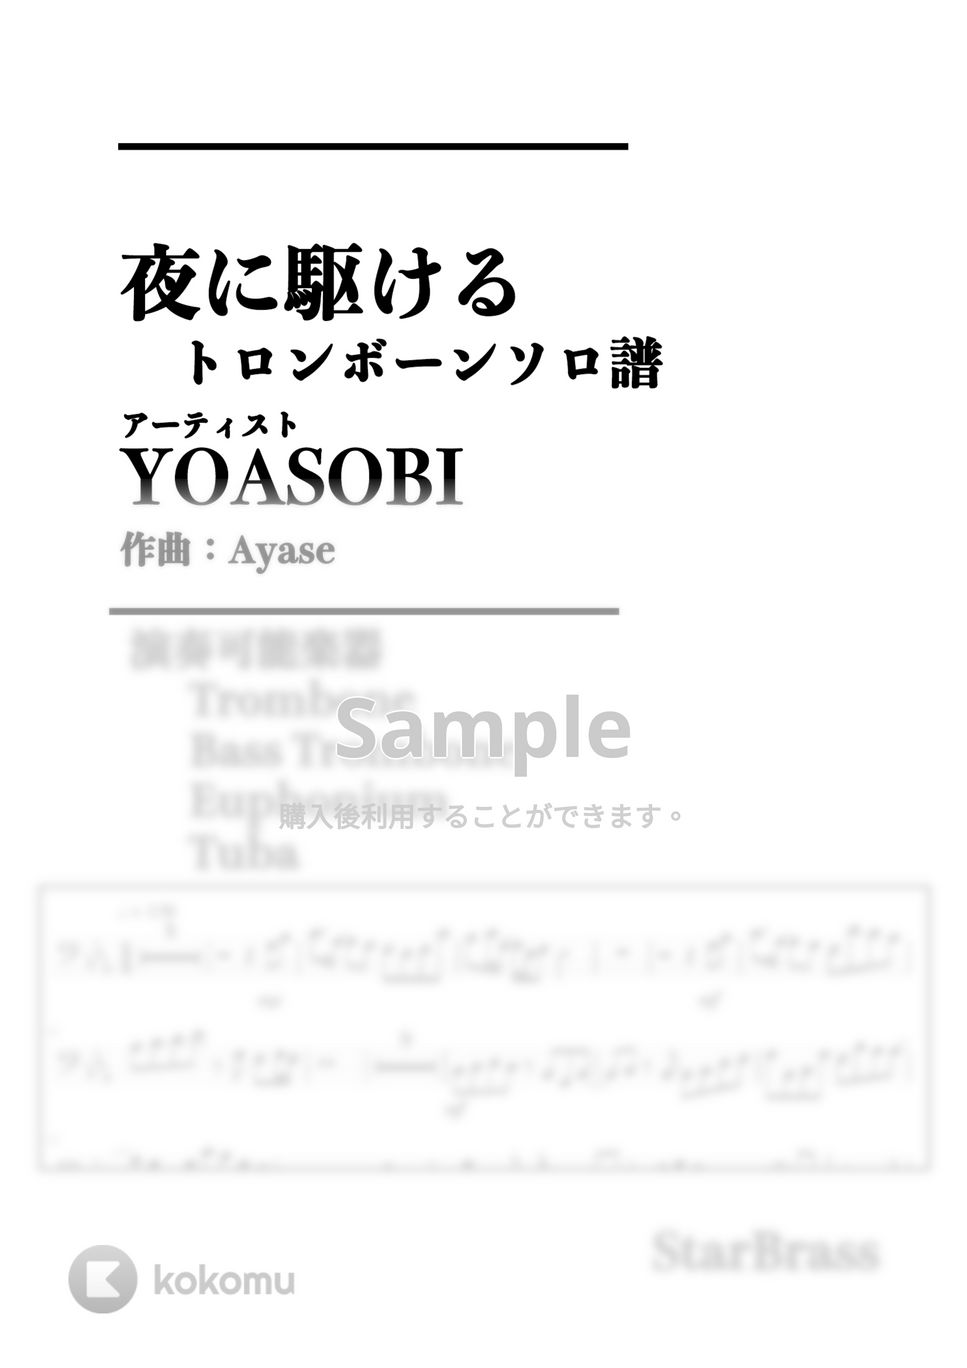 YOASOBI - 夜に駆ける (-Trombone Solo- 原キー) by Creampuff